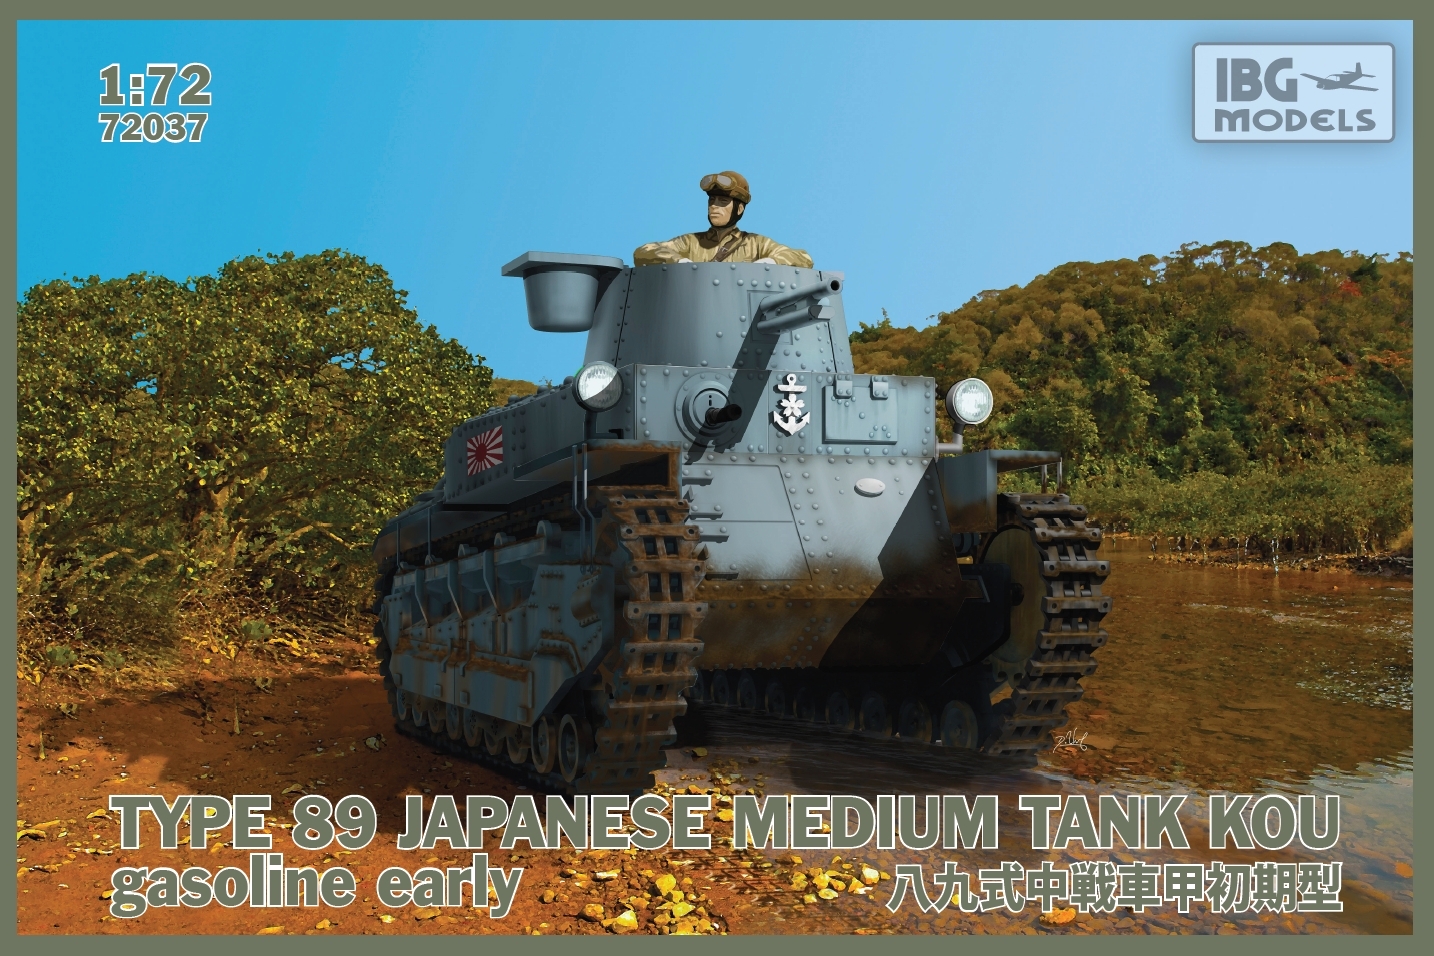 TYPE 89 Japanese Medium tank KOU - gasoline Early